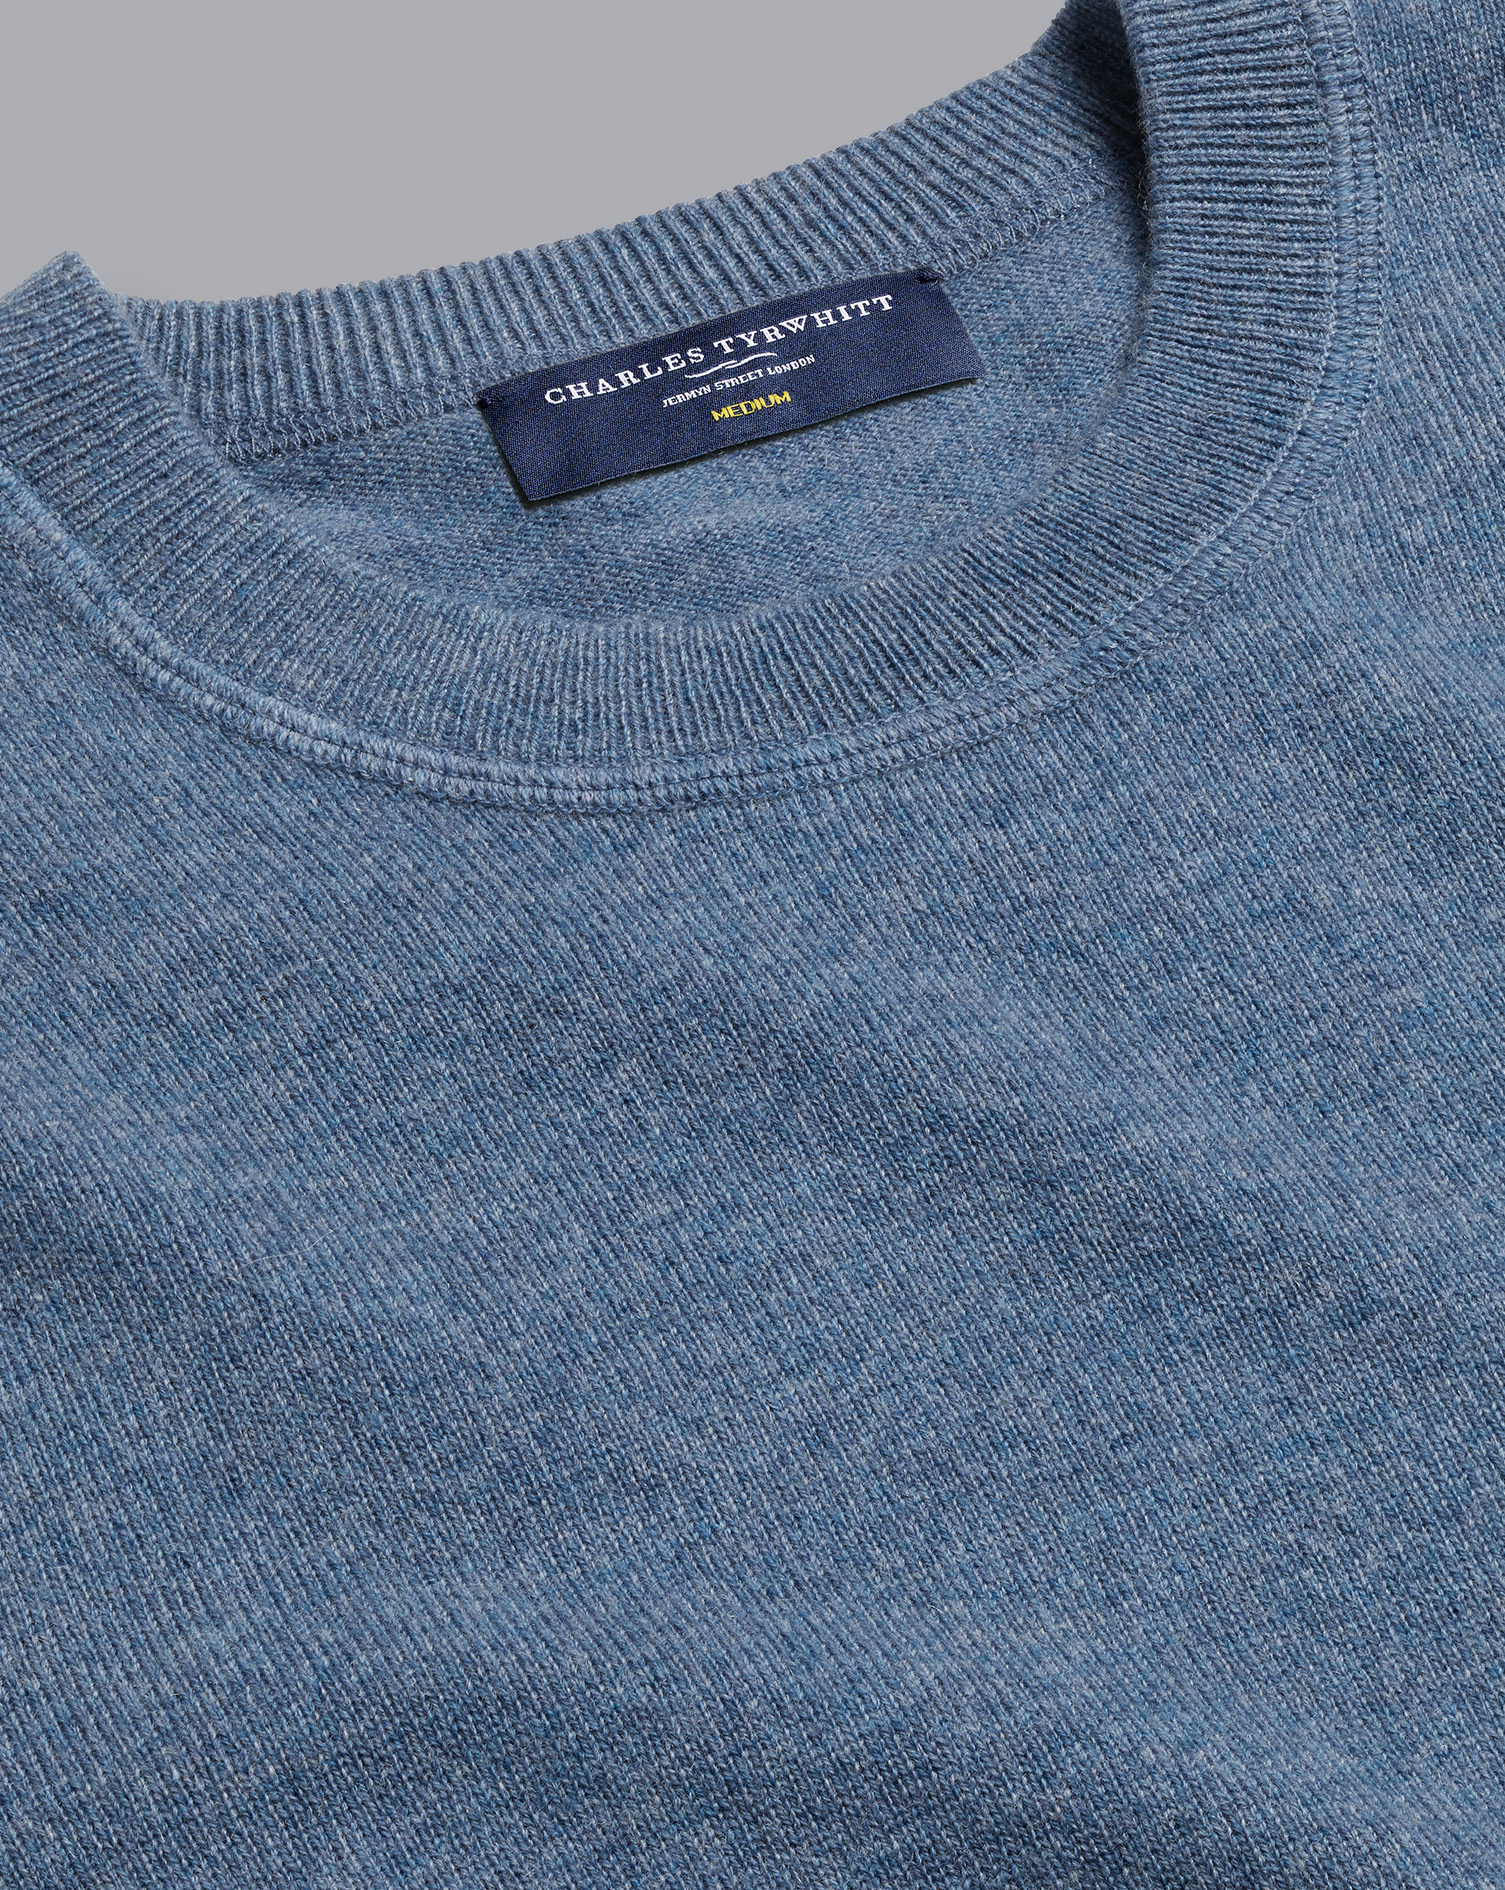 Men's Charles Tyrwhitt Crew Neck Sweater - Indigo Blue Size Small Merino Cashmere
